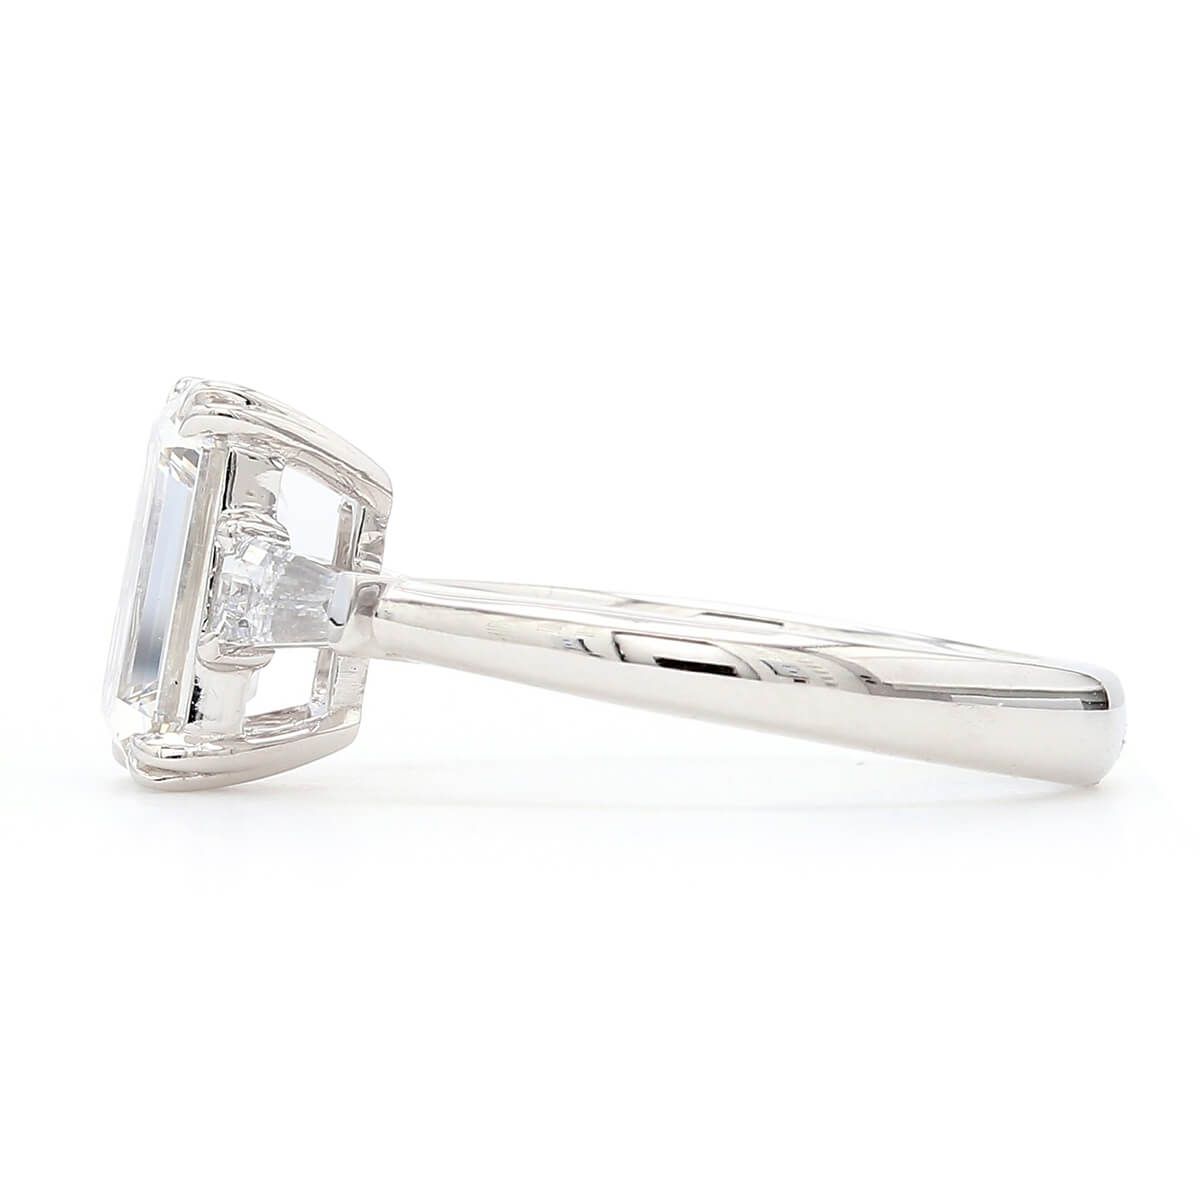  White Diamond Ring, 2.30 Ct. TW, Emerald shape, GIA Certified, 1156577980